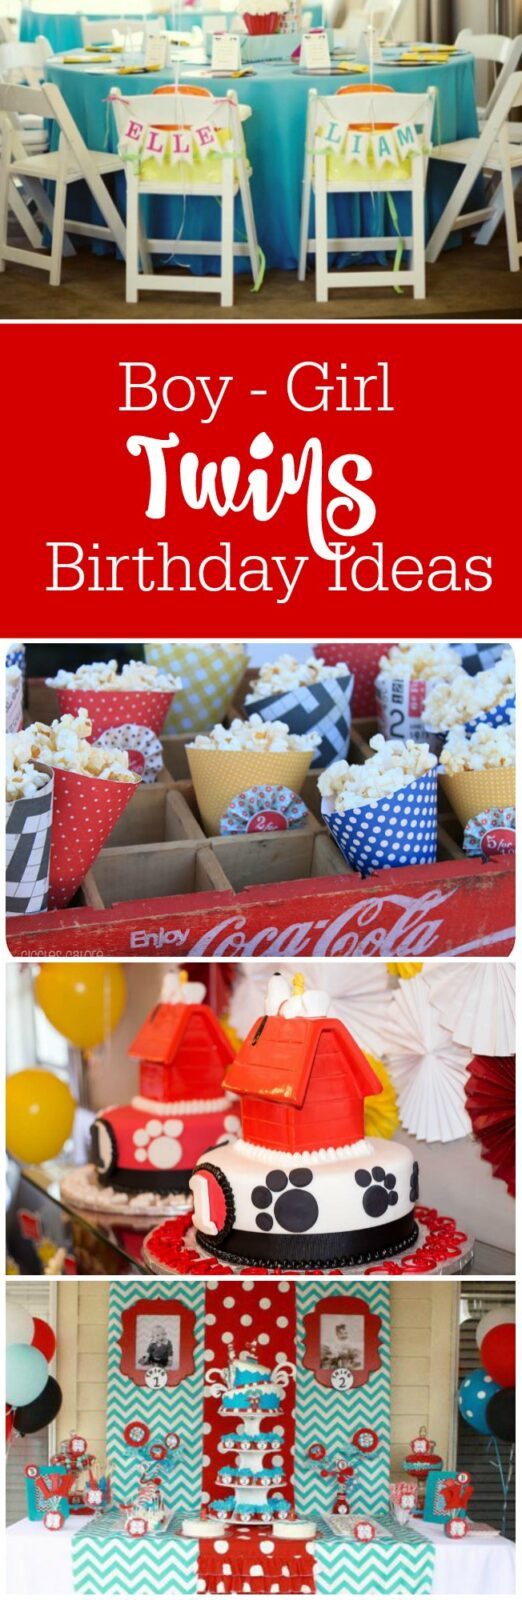 Boy Birthday Party Themes
 Birthday Party Ideas for Boy Girl Twins